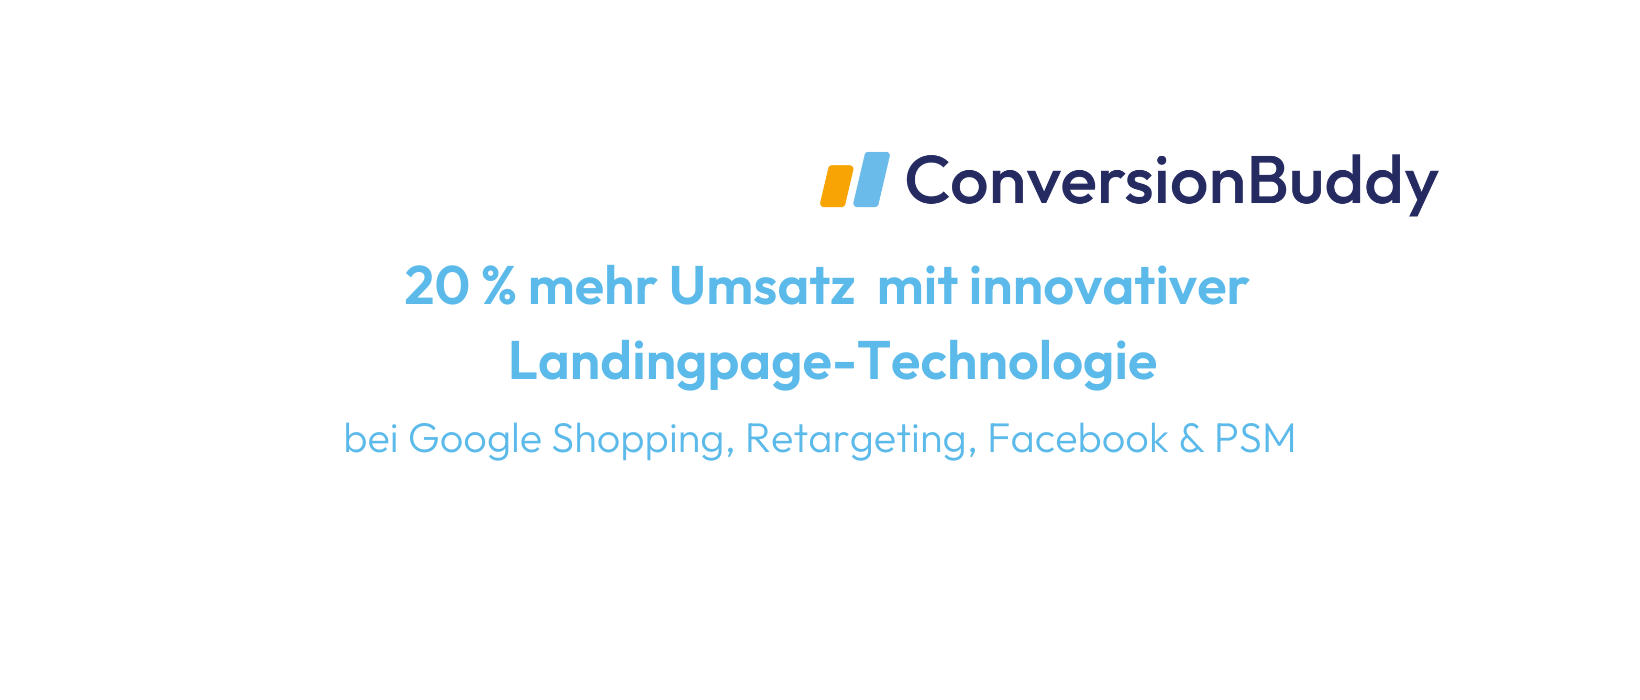 ConversionBuddy / startup from Bremen / Background